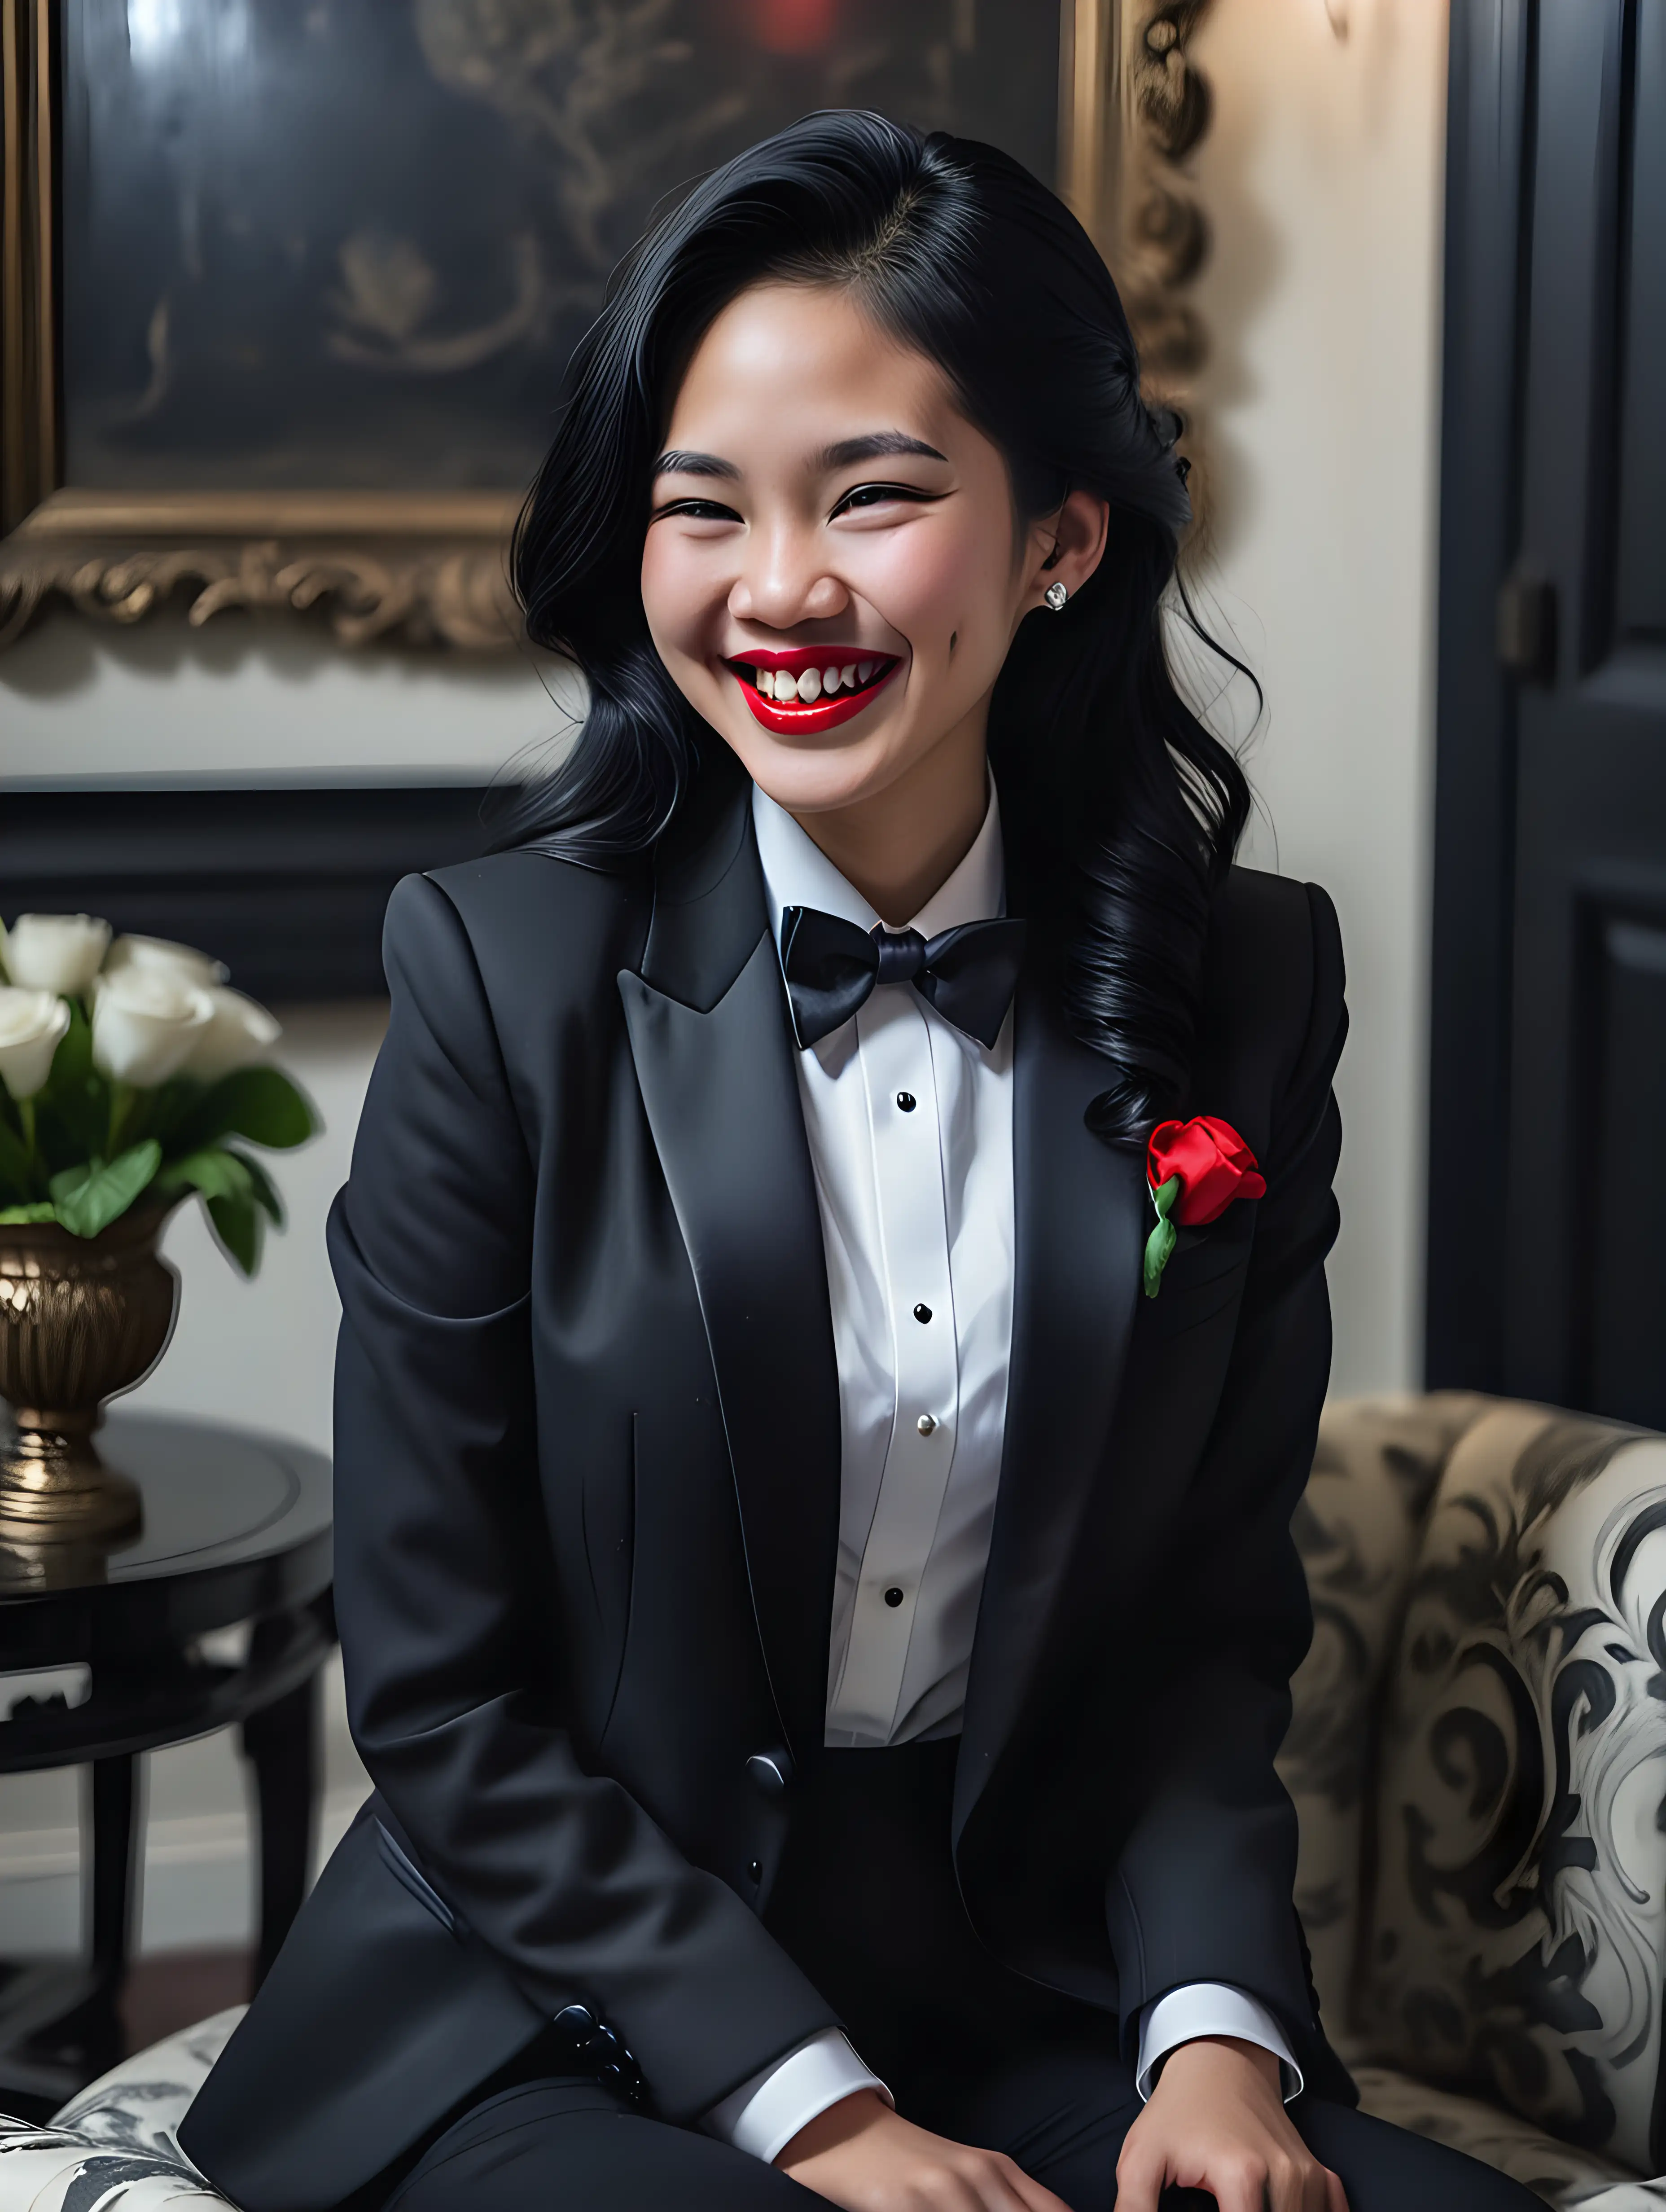 Elegant-Vietnamese-Woman-in-Tuxedo-Portrait-in-Mansion